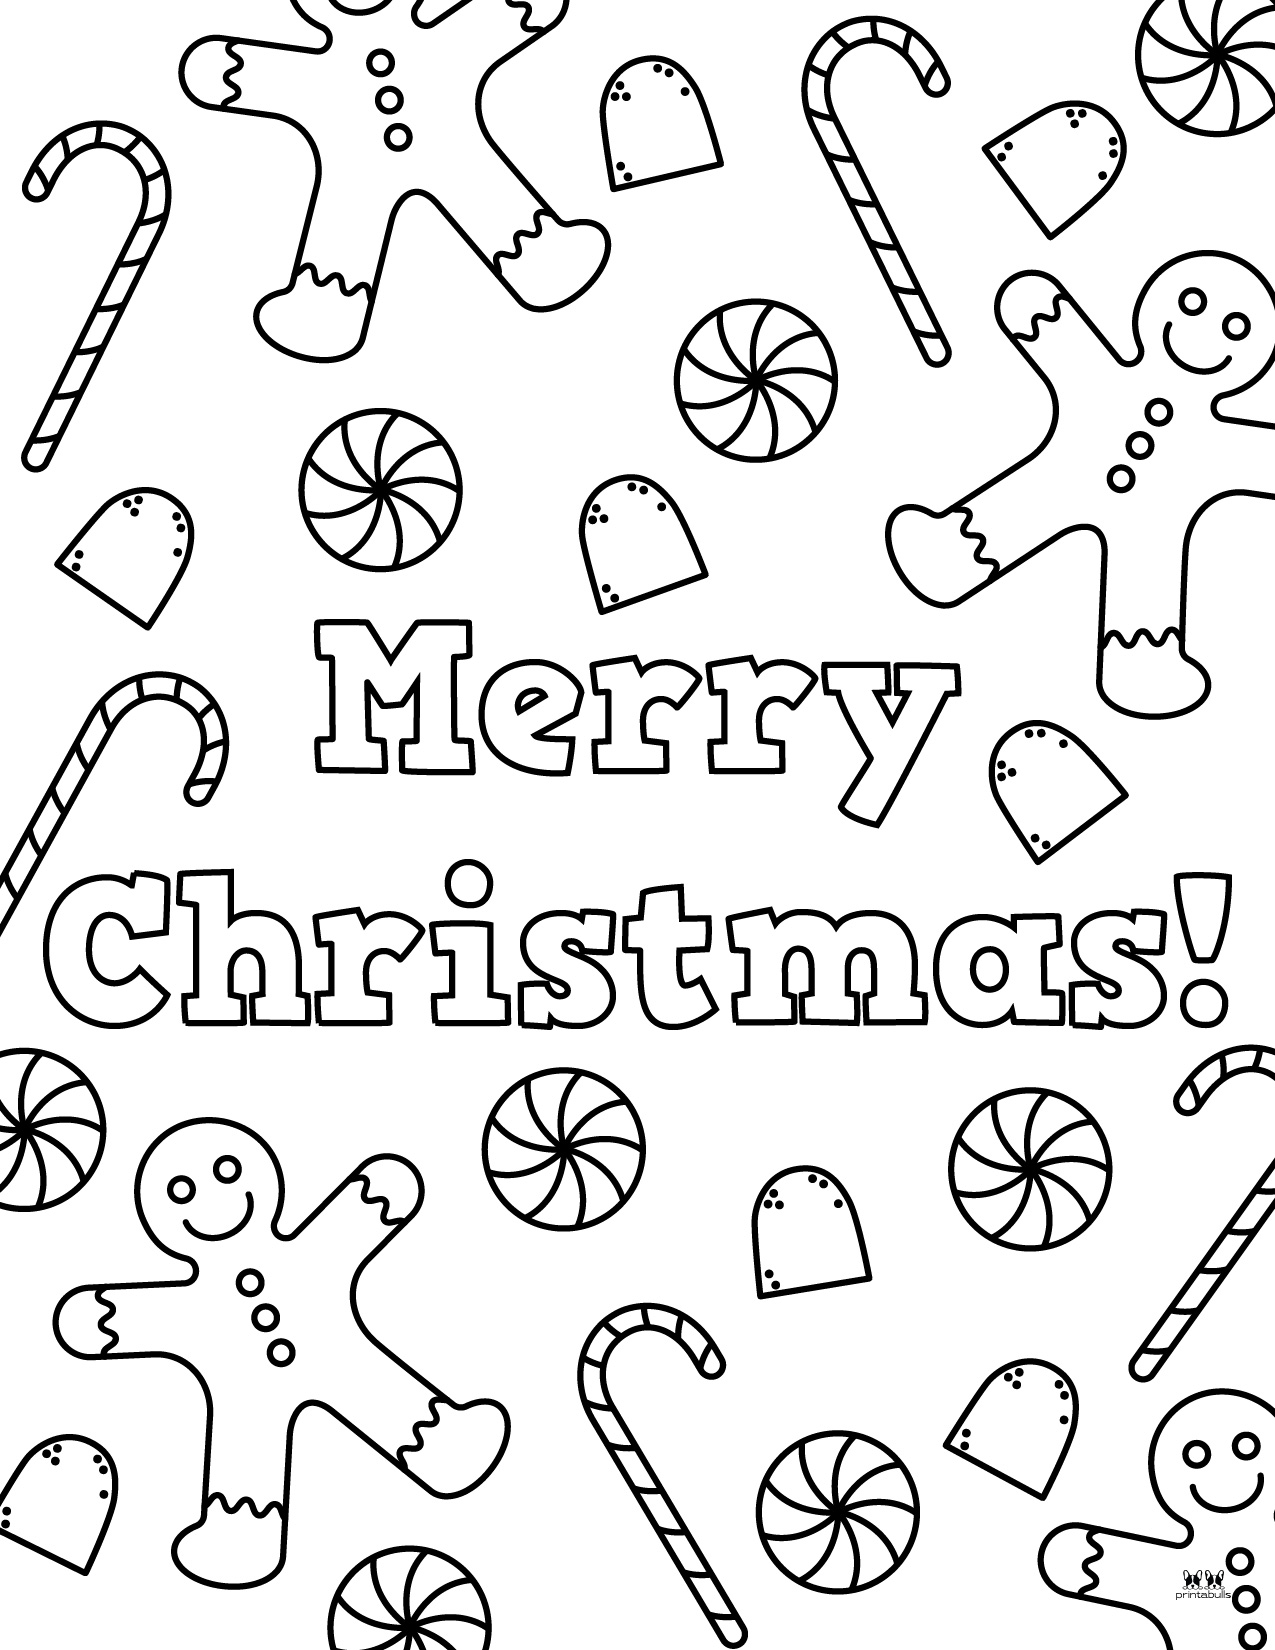 Merry Christmas Coloring Pages - FREE Printables | Printabulls